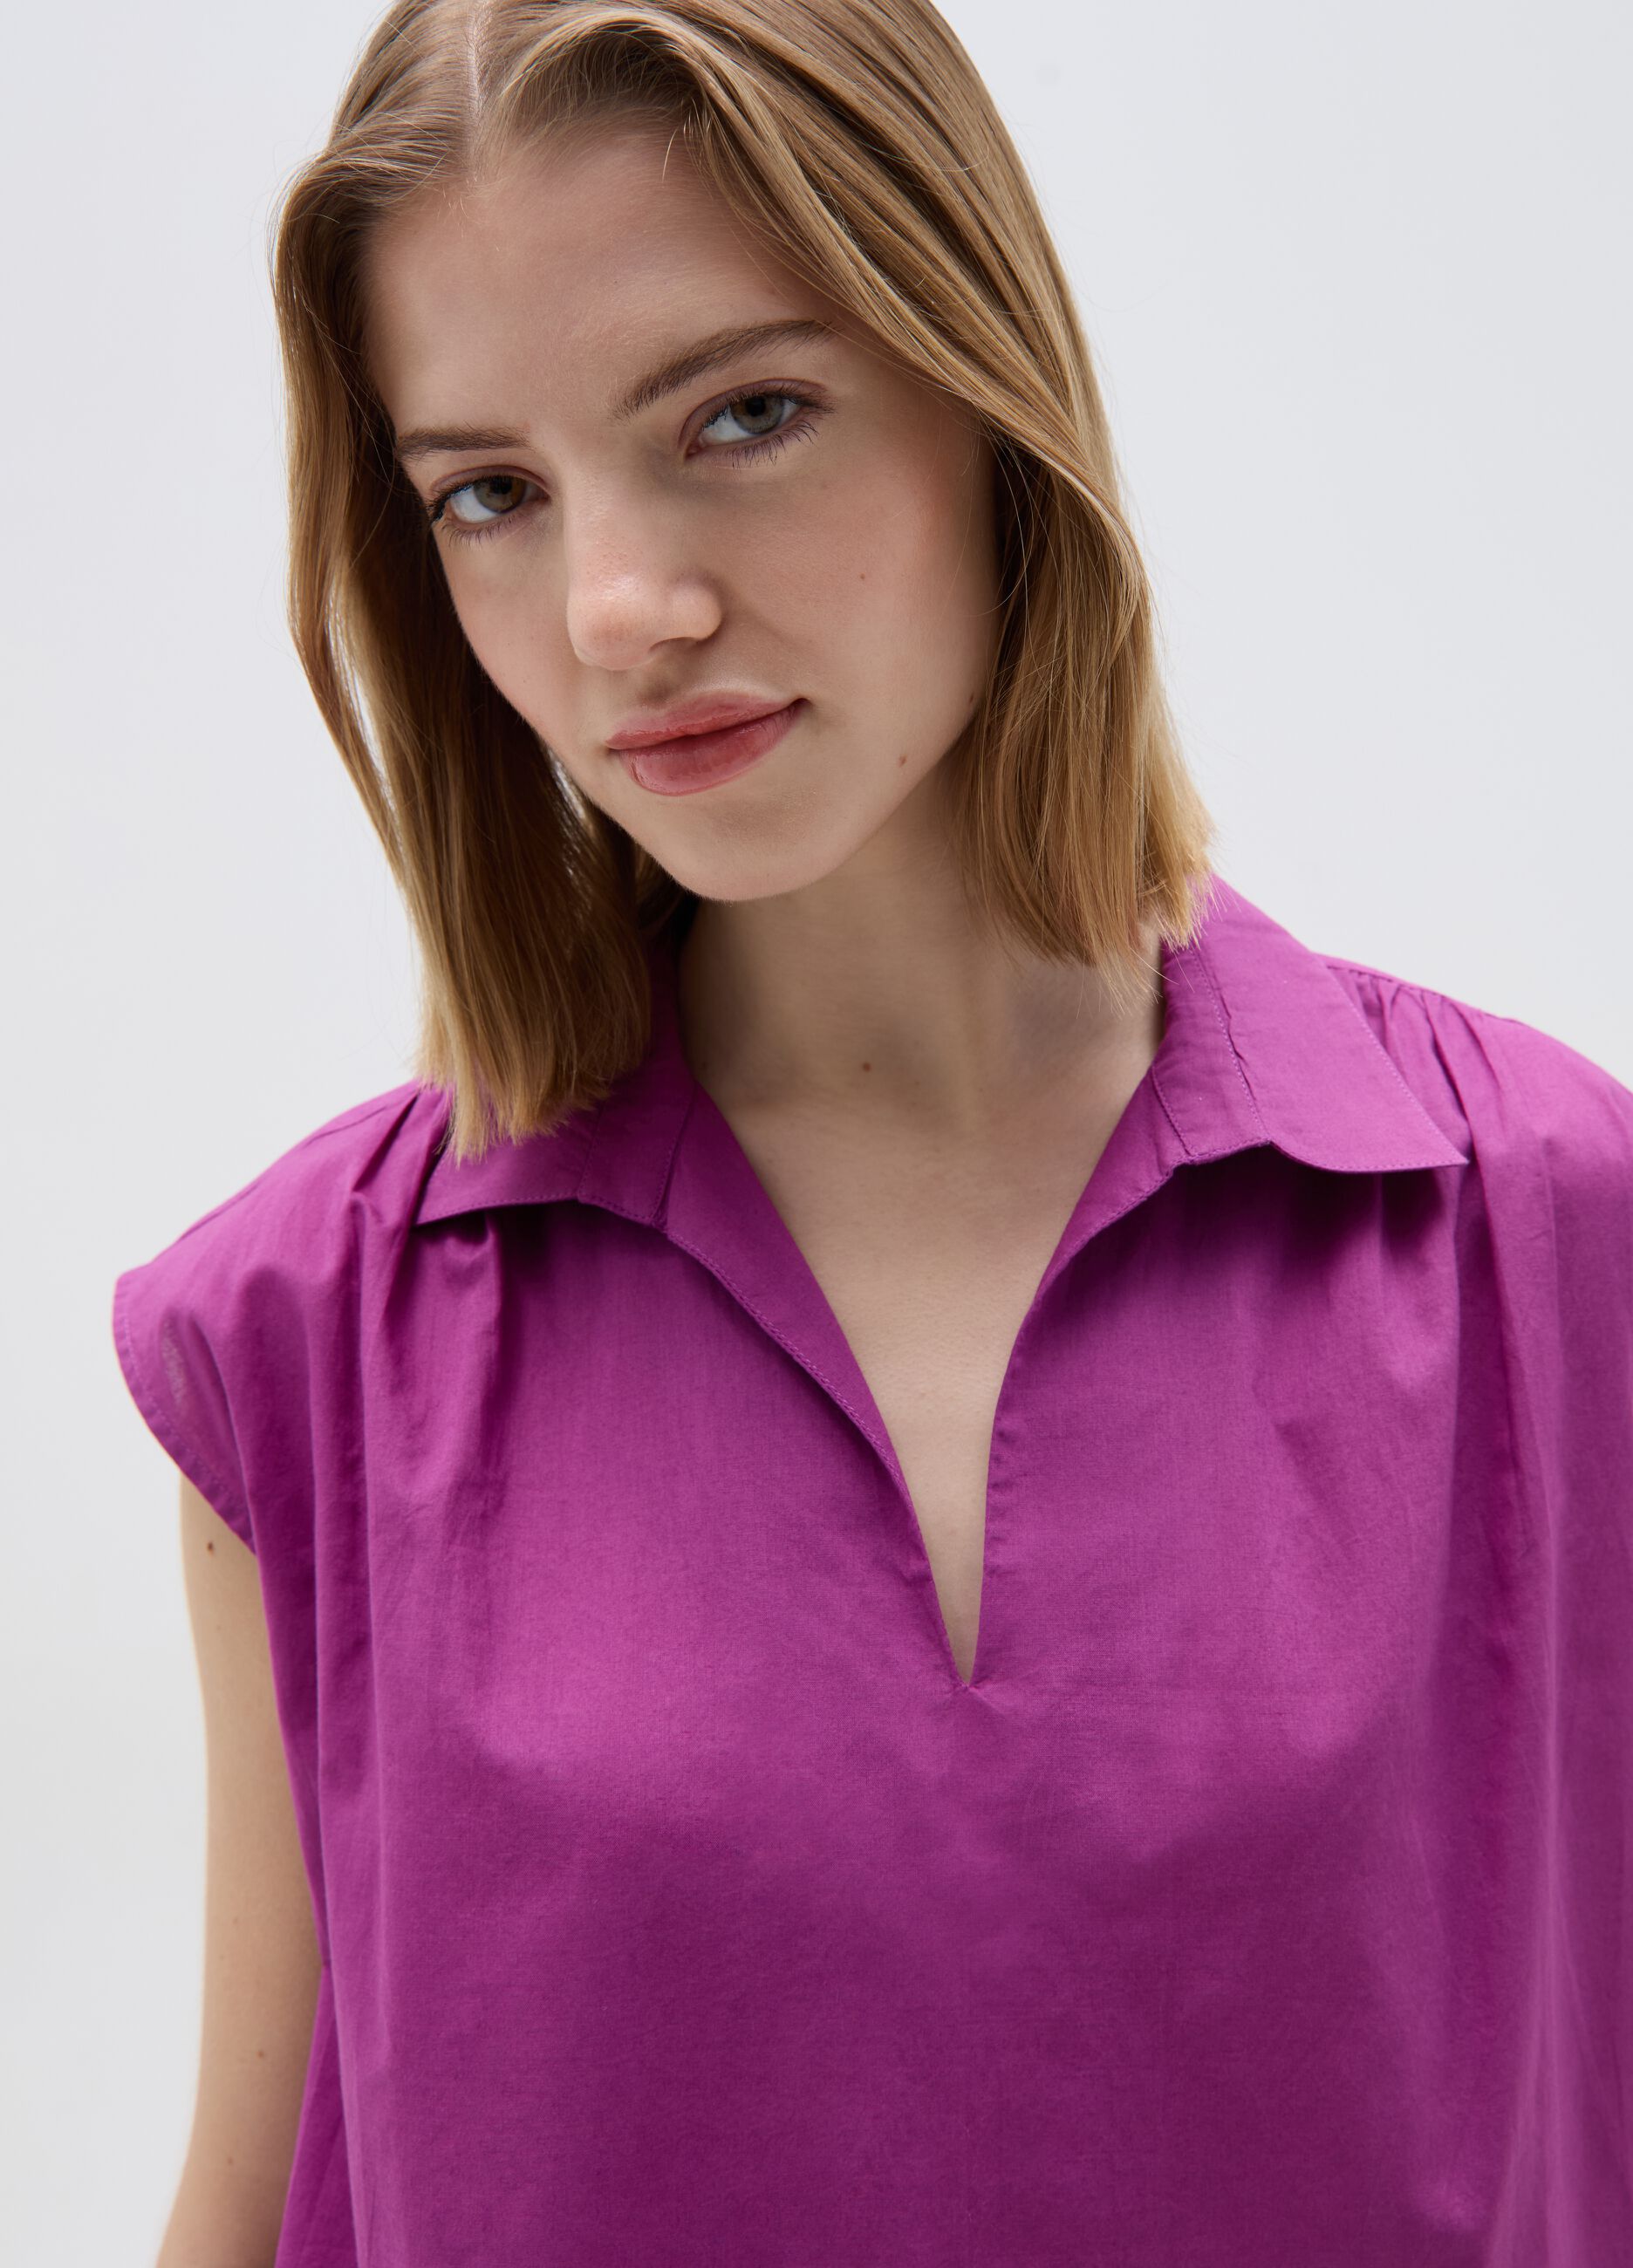 Sleeveless blouse with polo neck